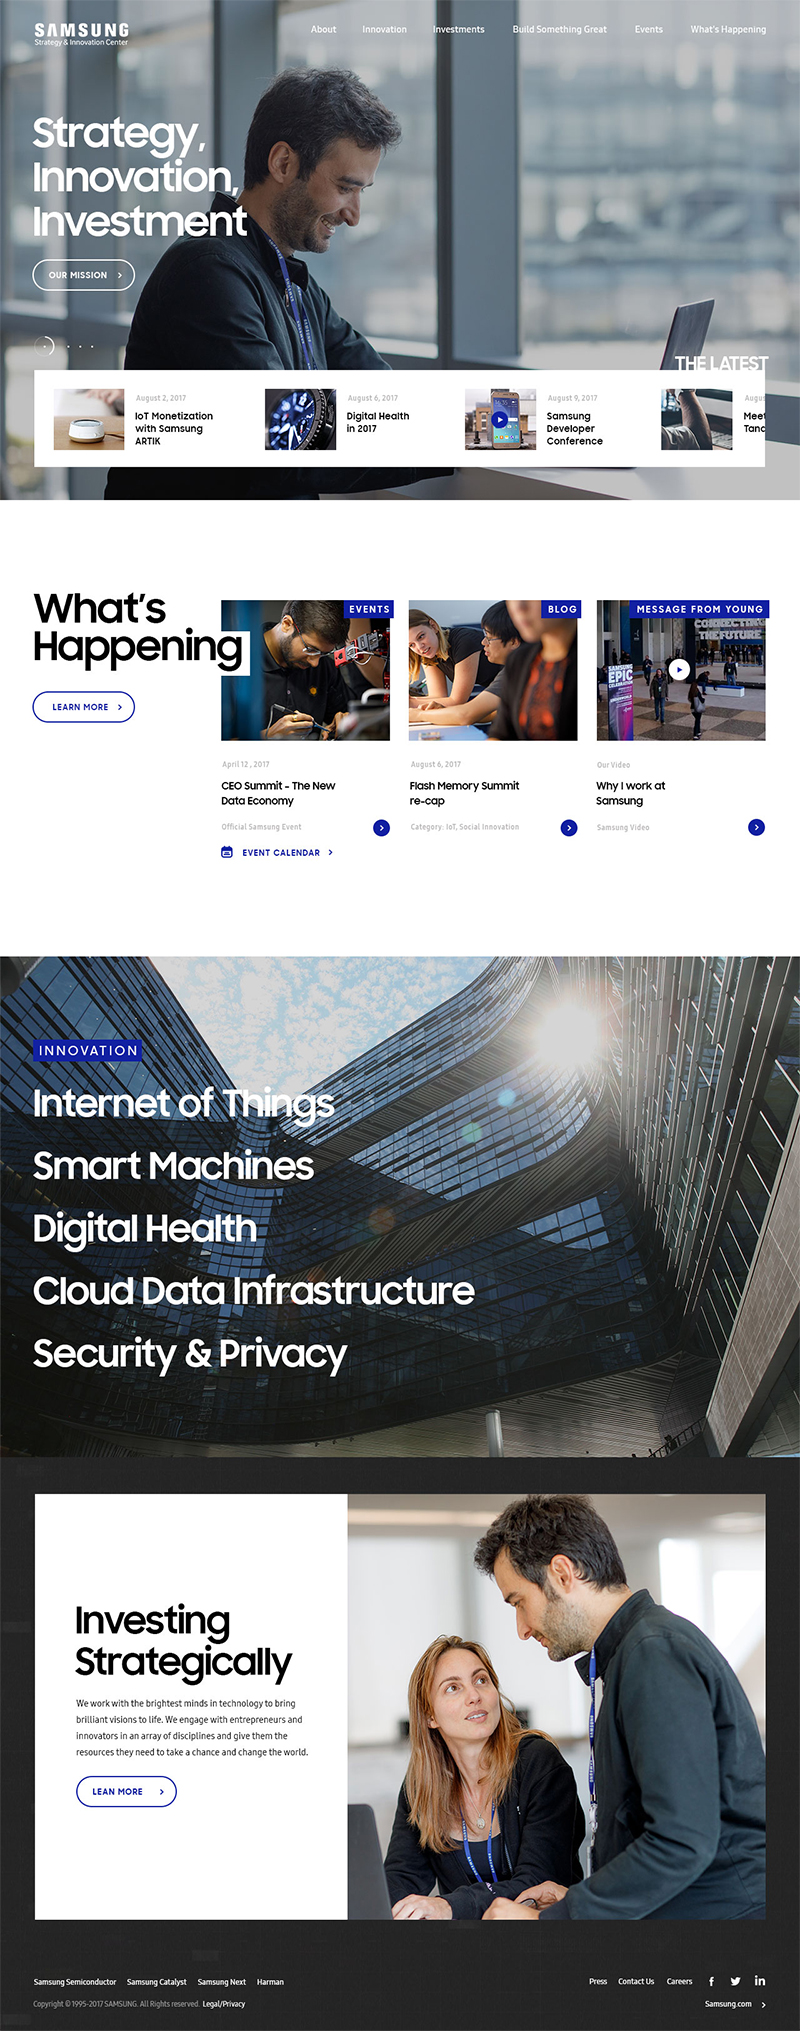 Samsung SIC's Home Page Design & Development